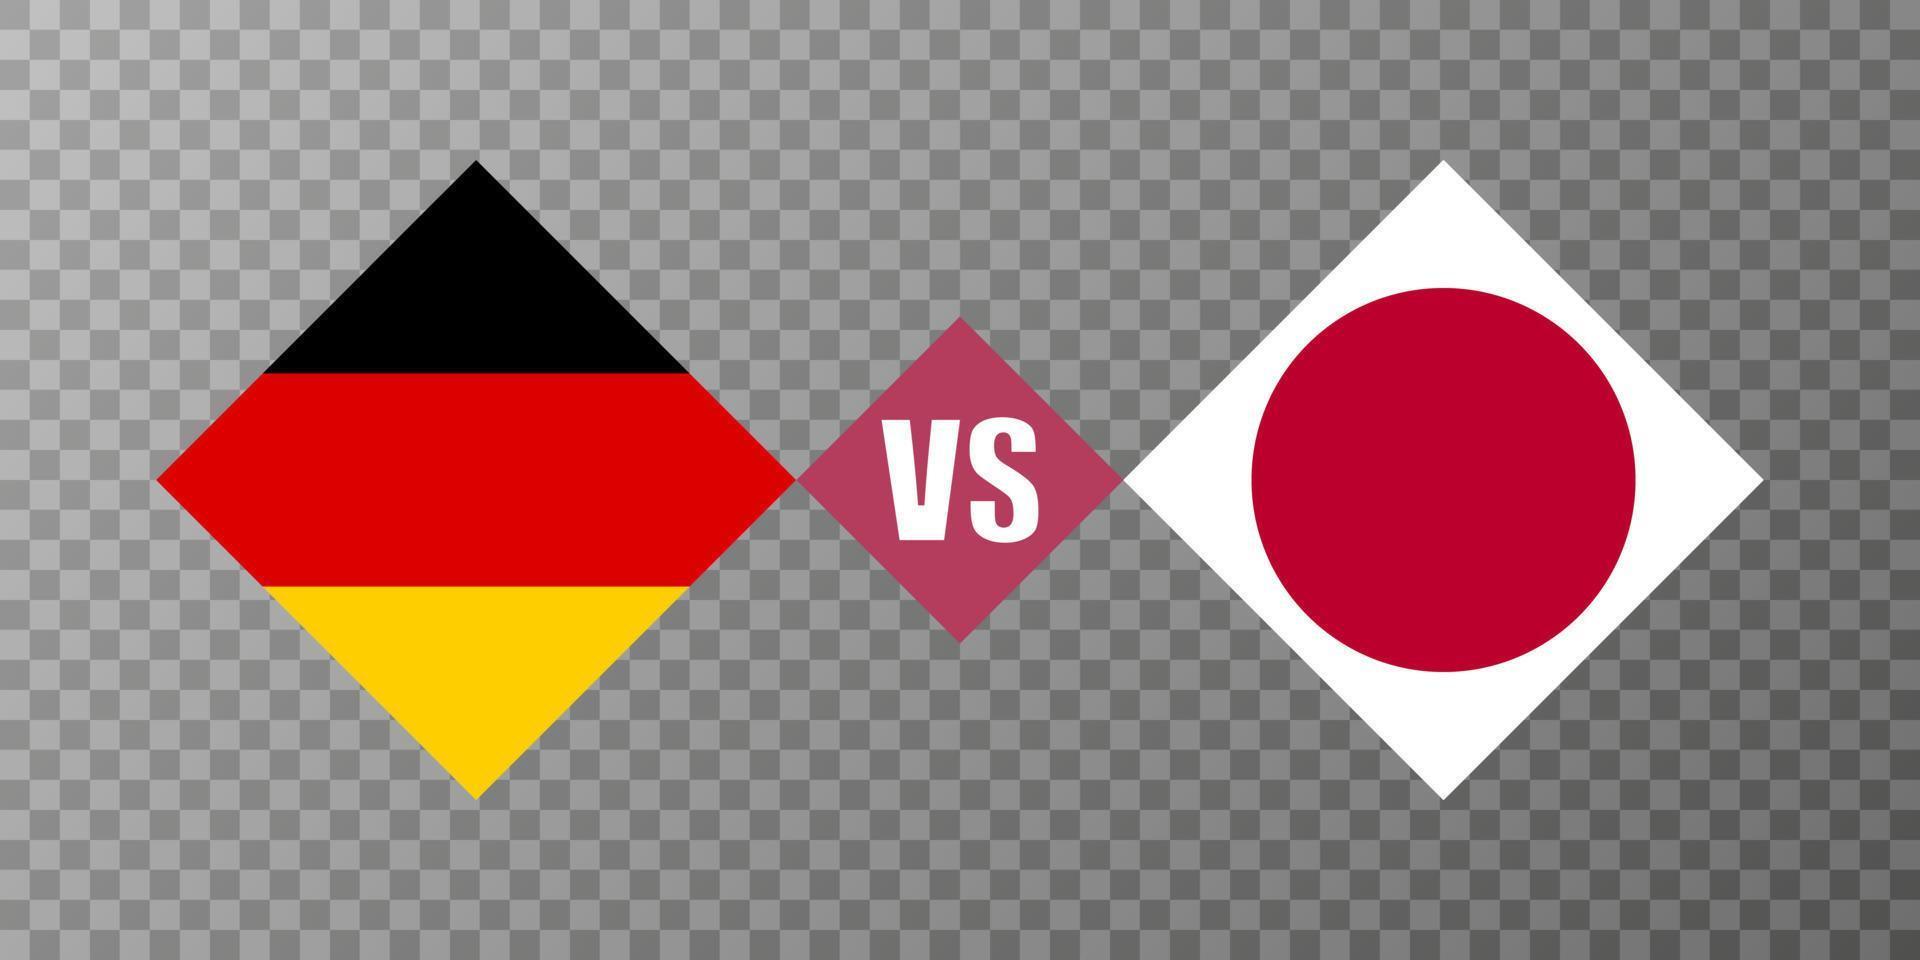 Tyskland vs Japan flagga koncept. vektor illustration.